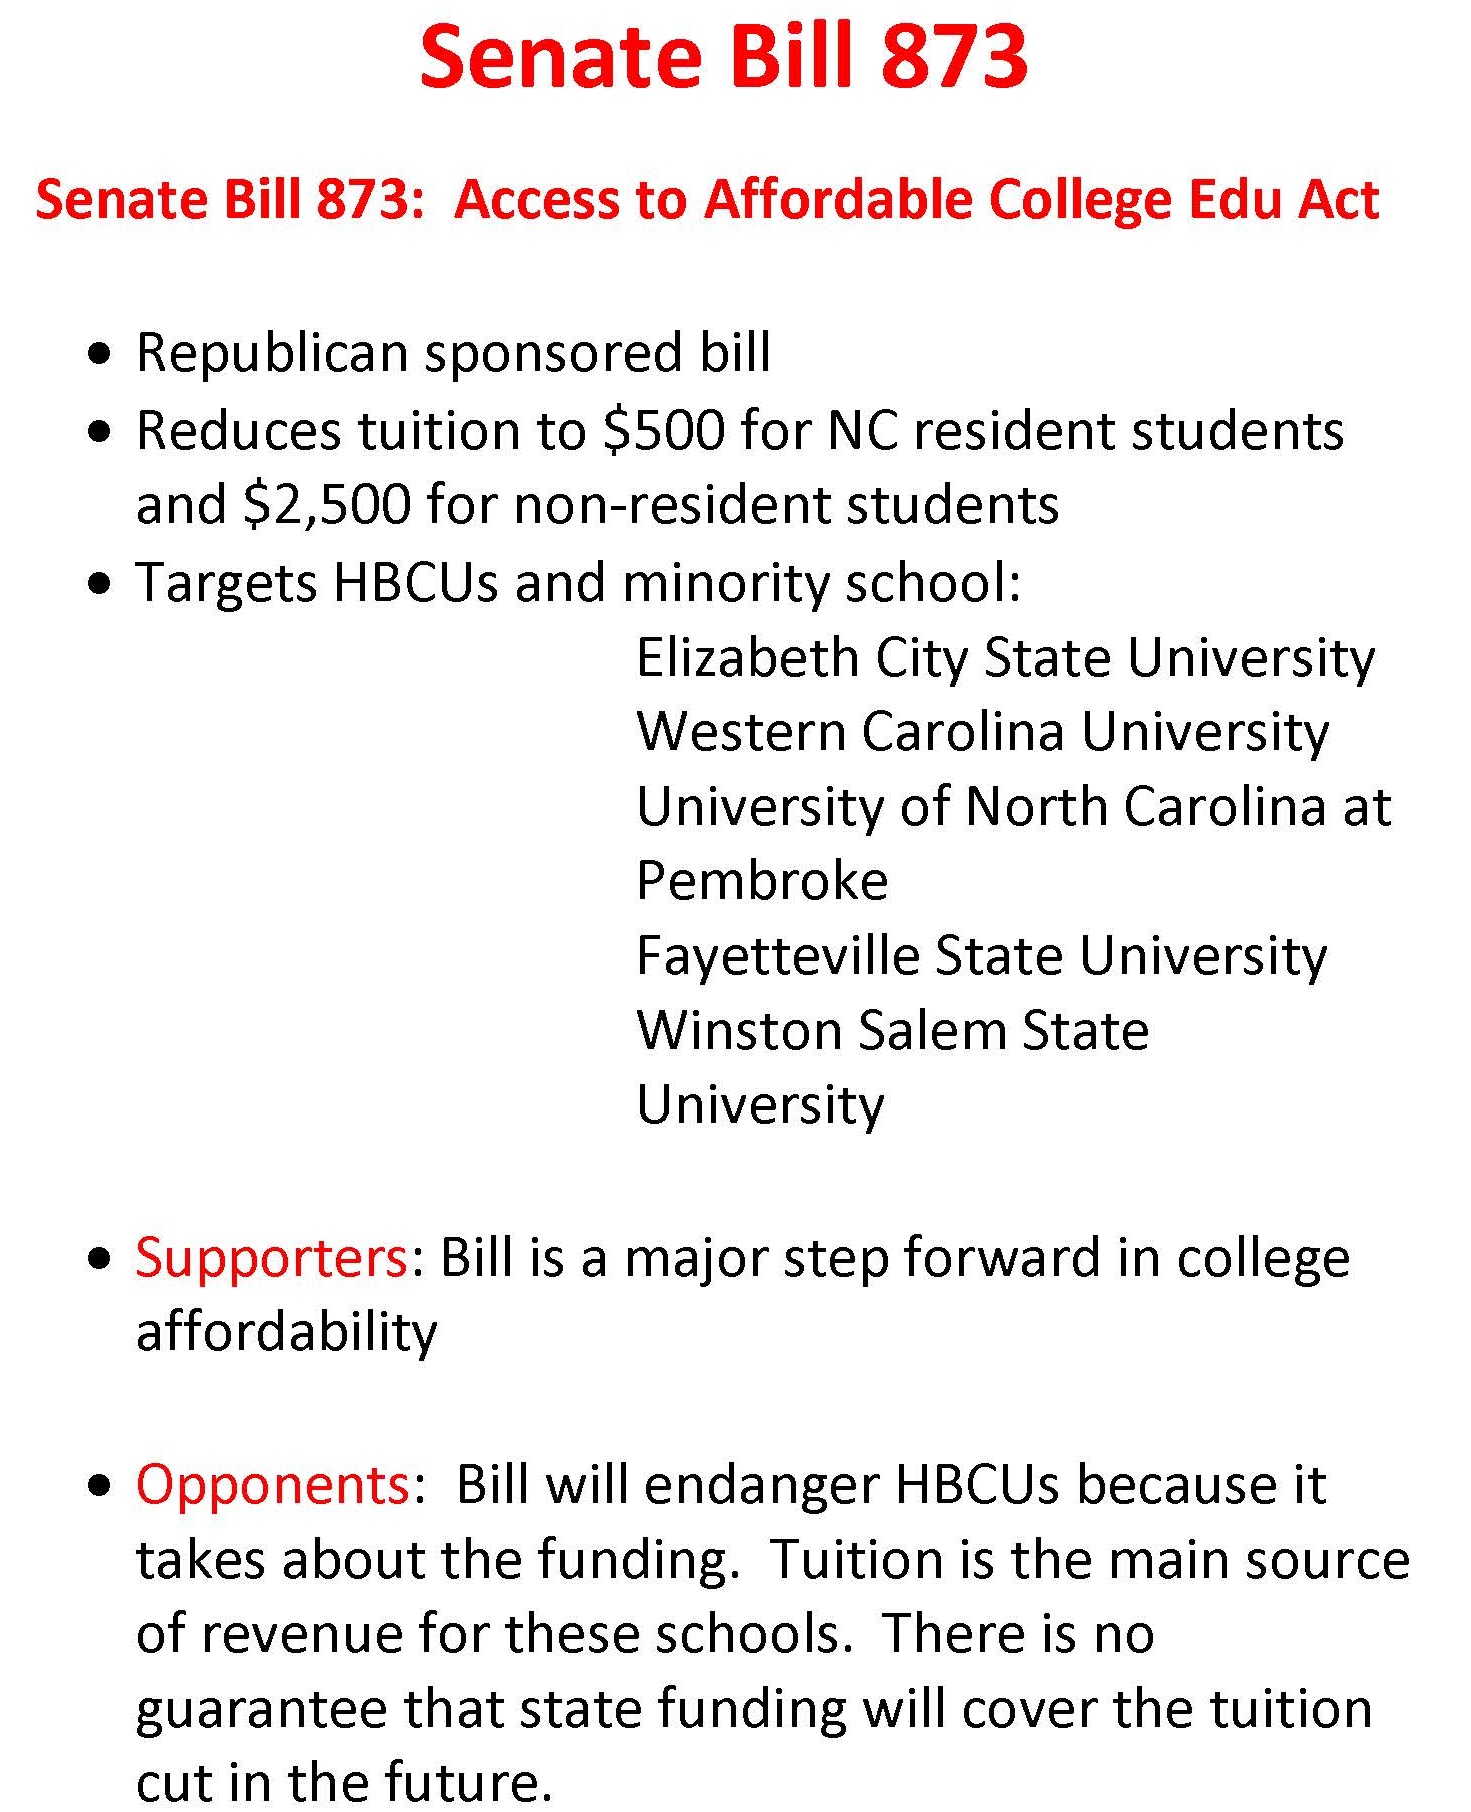 Senate Bill 873 Summary